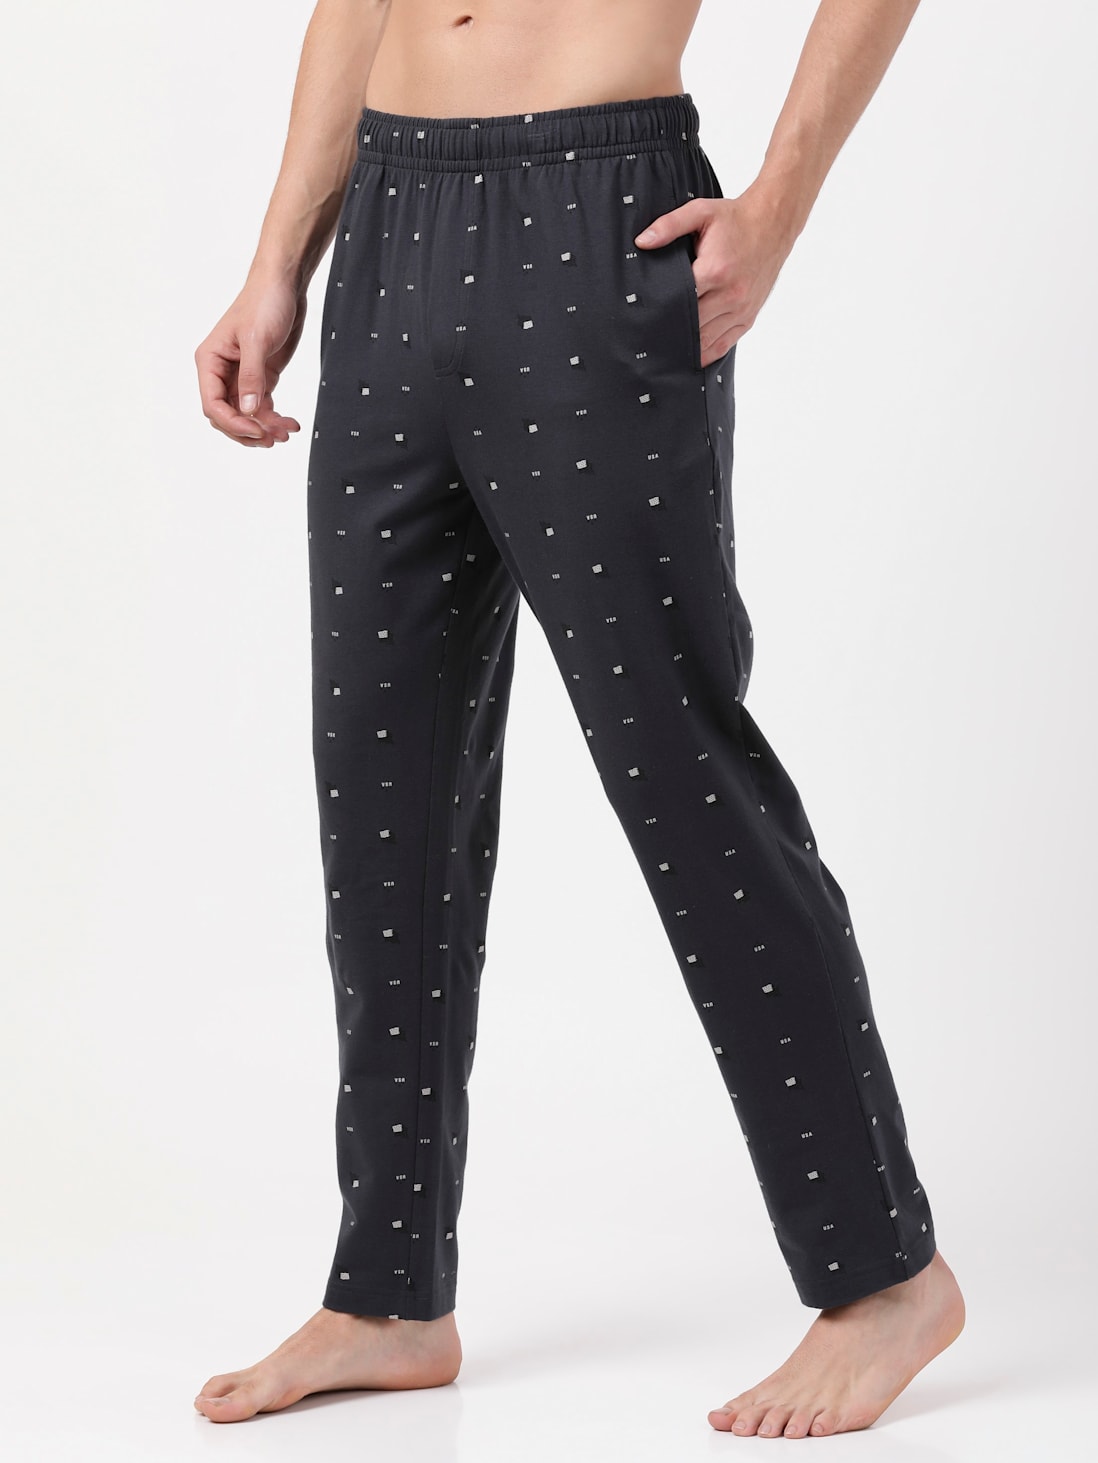 Womens Black and White Flannel Pajama Pants  Zazzle  Flannel pajama pants  Mens flannel pajamas Pajama pants